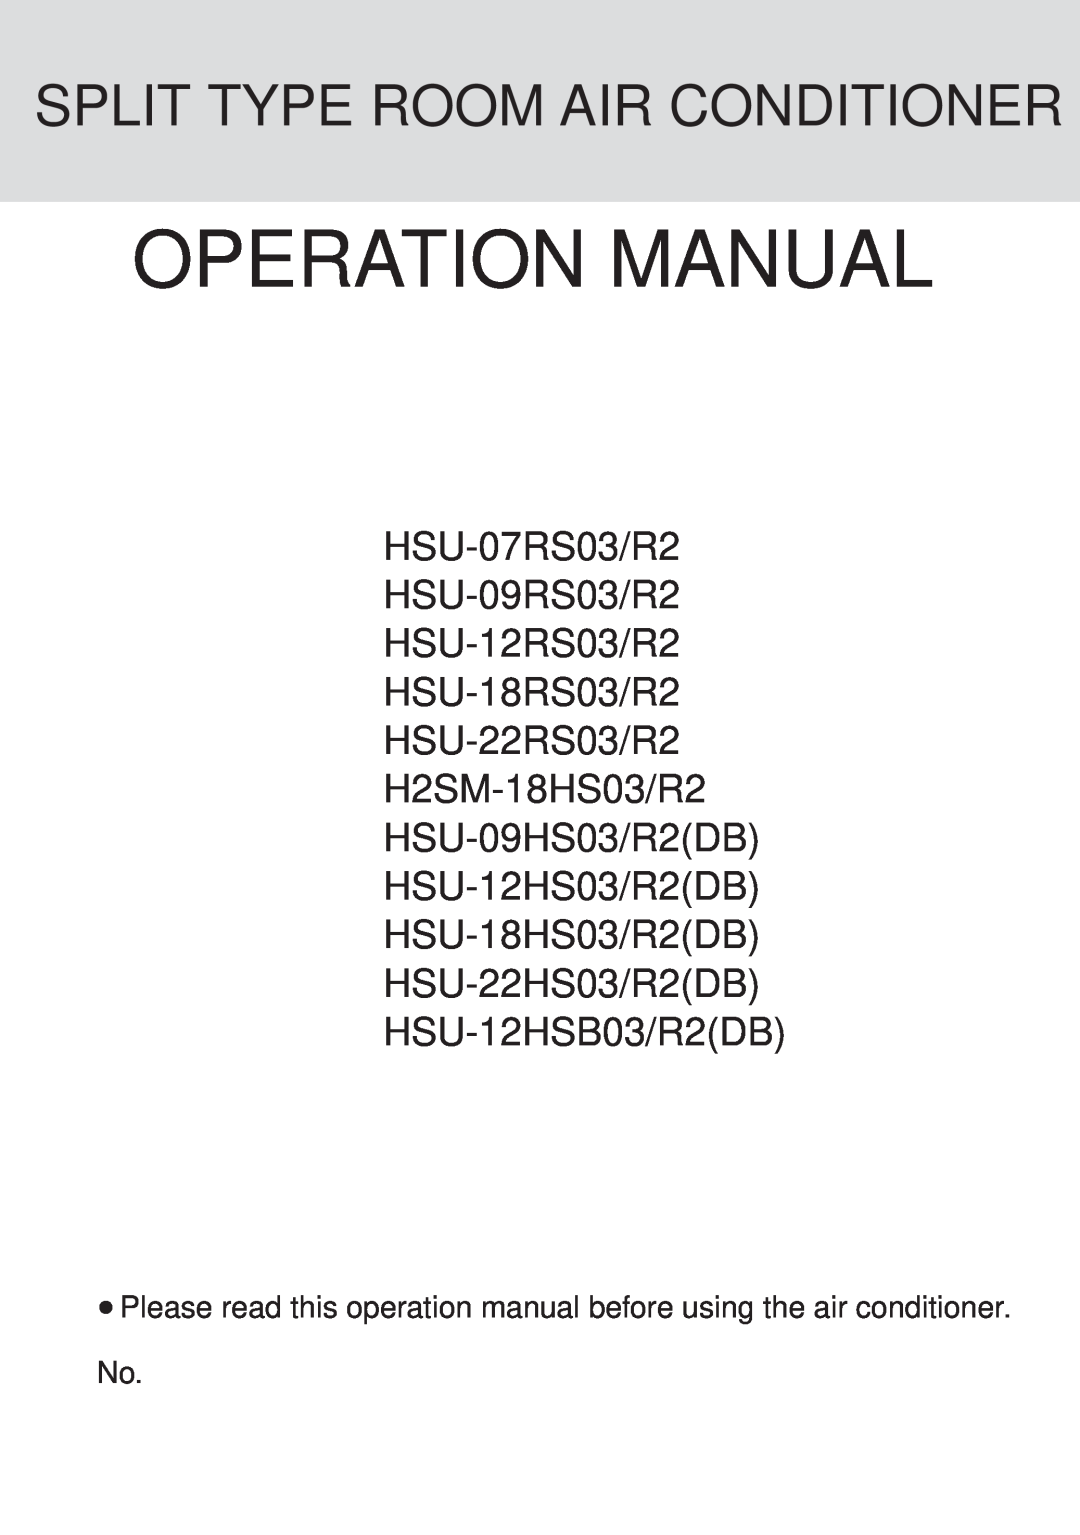 Haier operation manual HSU-07RS03/R2 HSU-09RS03/R2 HSU-12RS03/R2, HSU-18RS03/R2 HSU-22RS03/R2 H2SM-18HS03/R2 